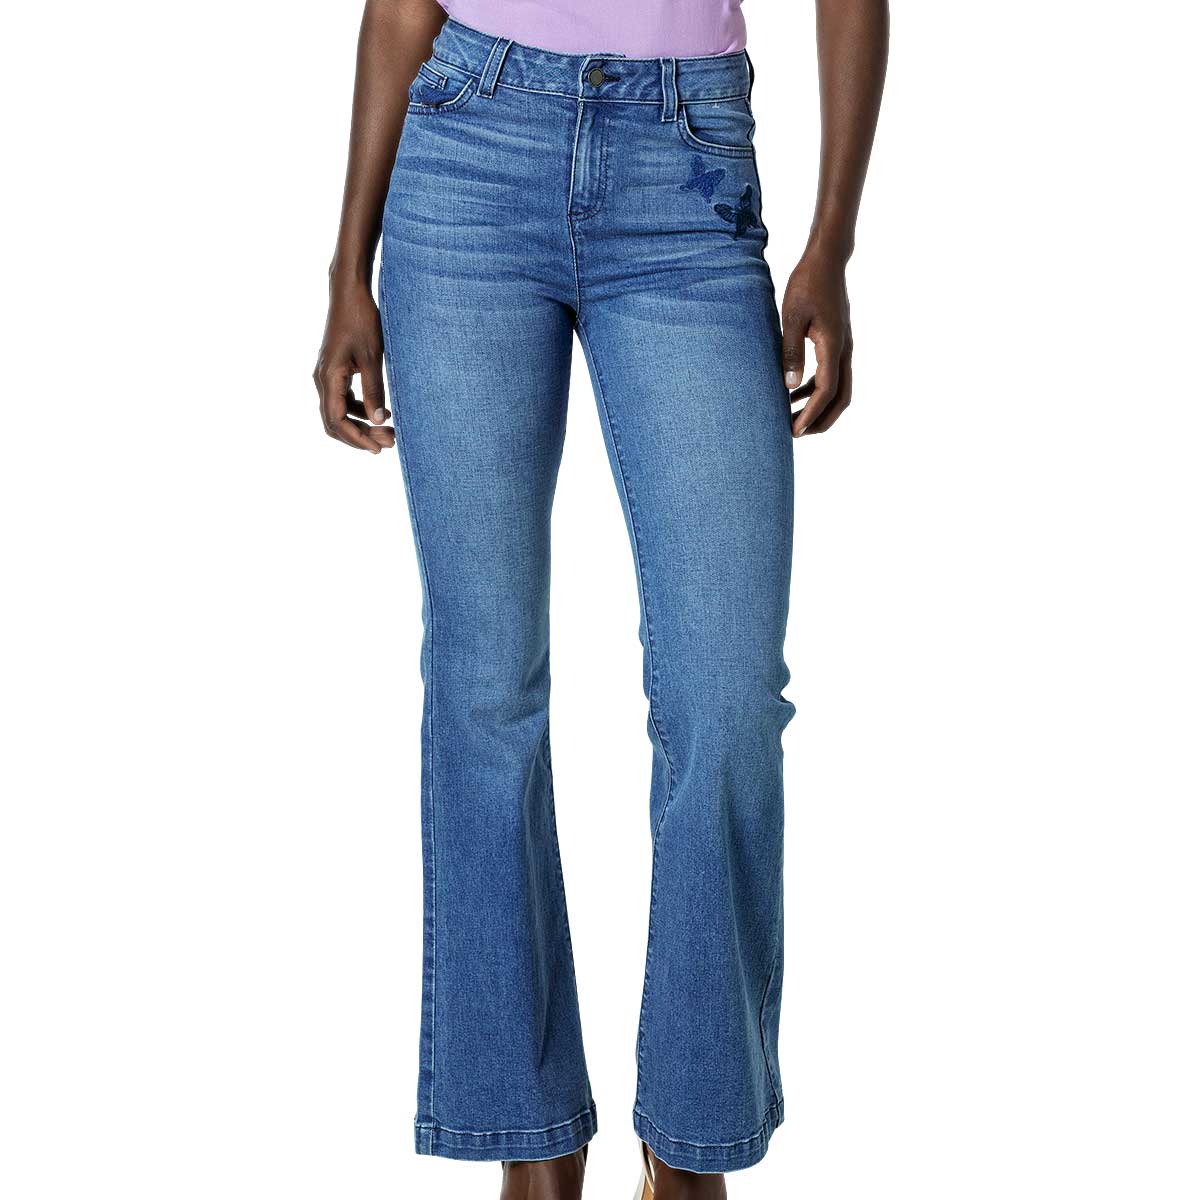 Pakar.com - Mayo: Regalos para mamá | Jeans para mujer cod-117947